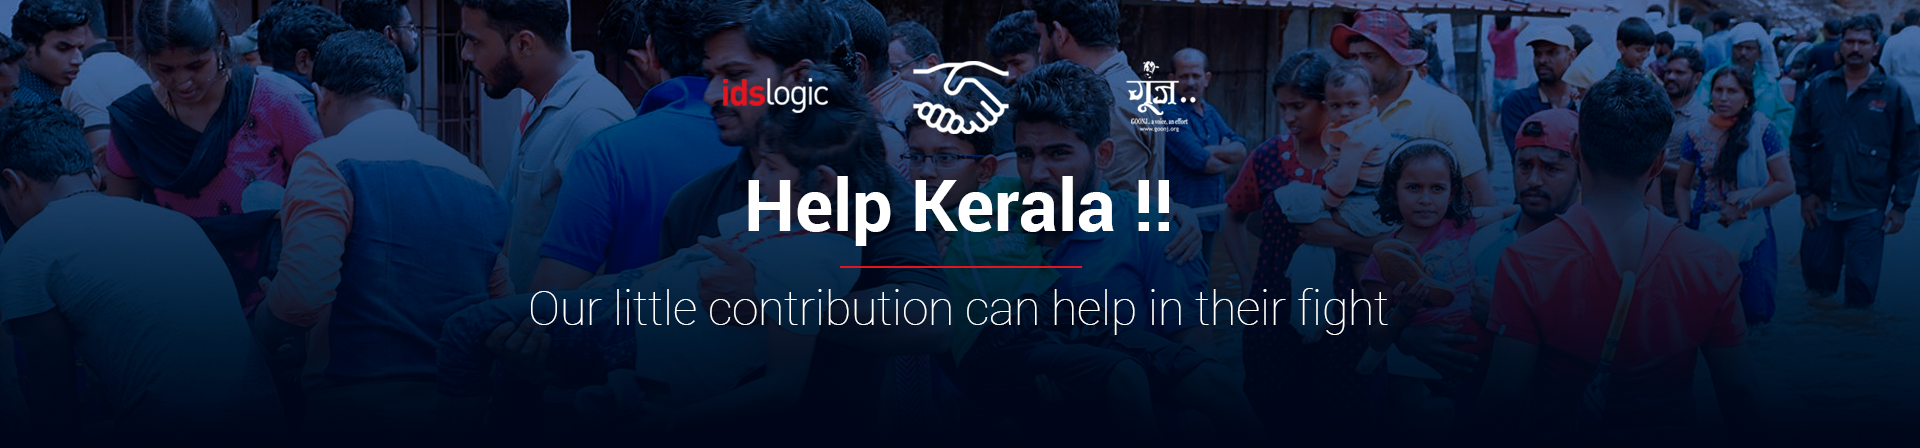 Help-Kerala